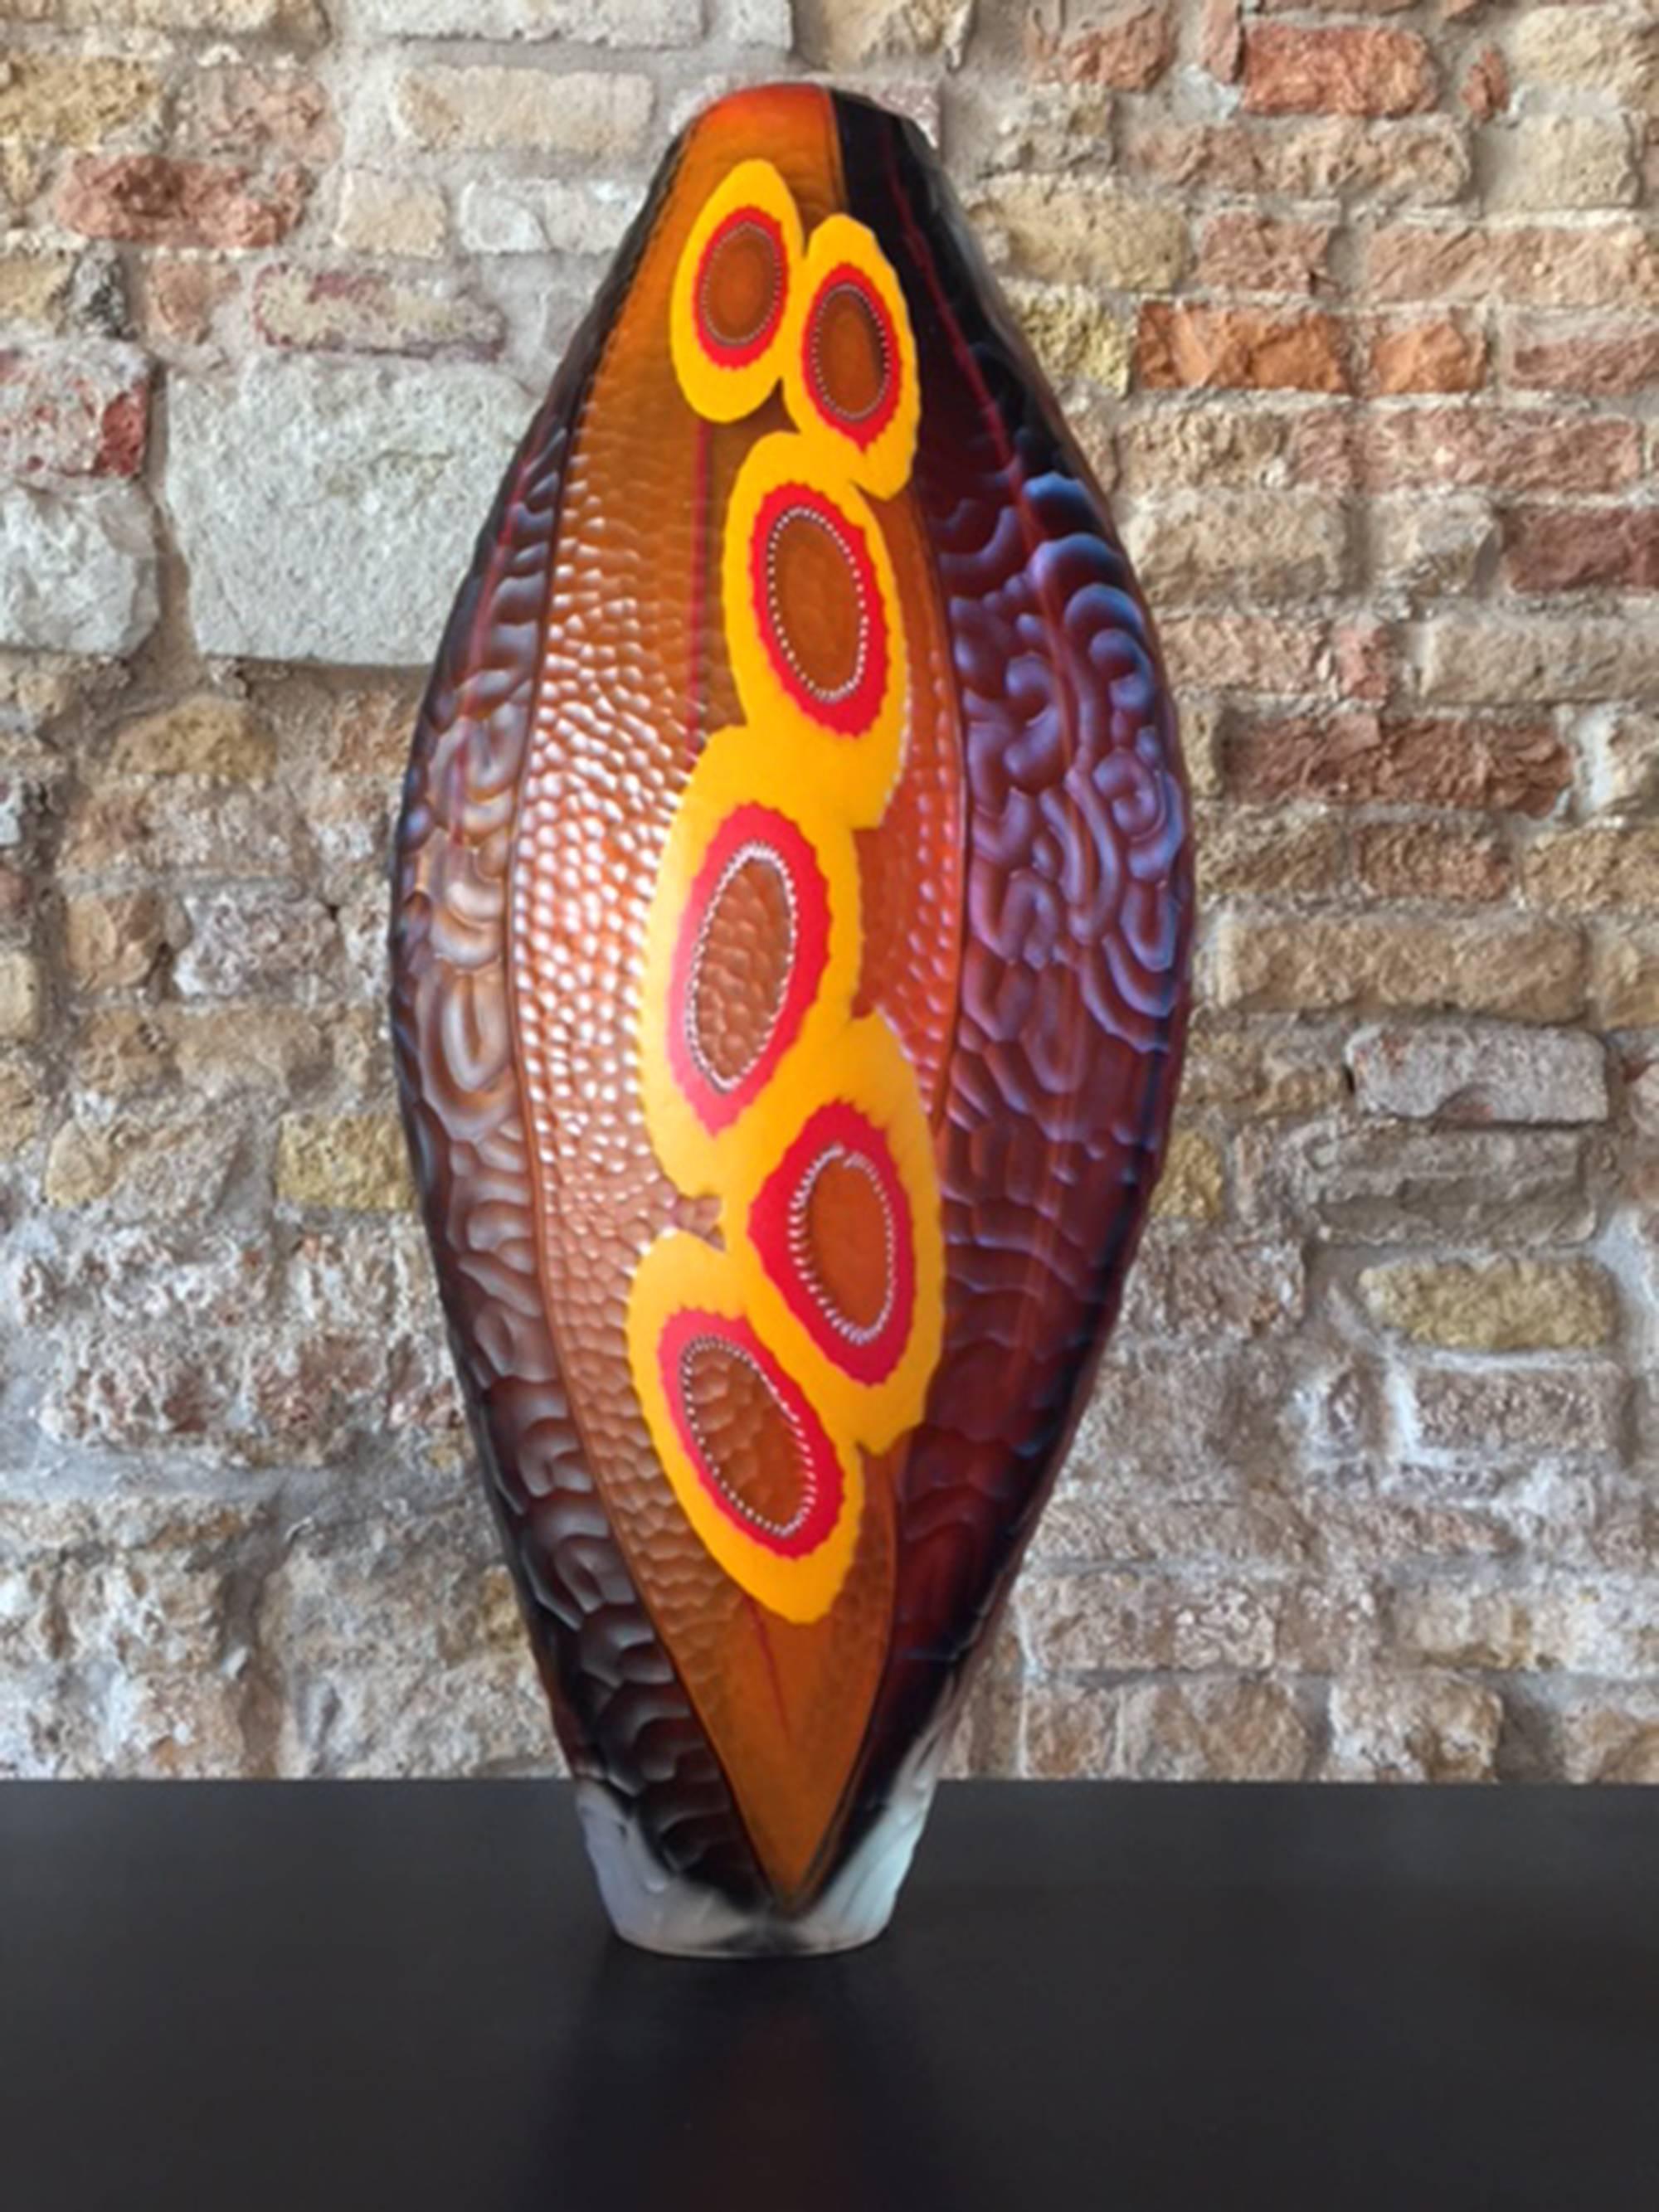 Evviva Series, Amber Vase - Sculpture by Marco & Mattia Salvadore